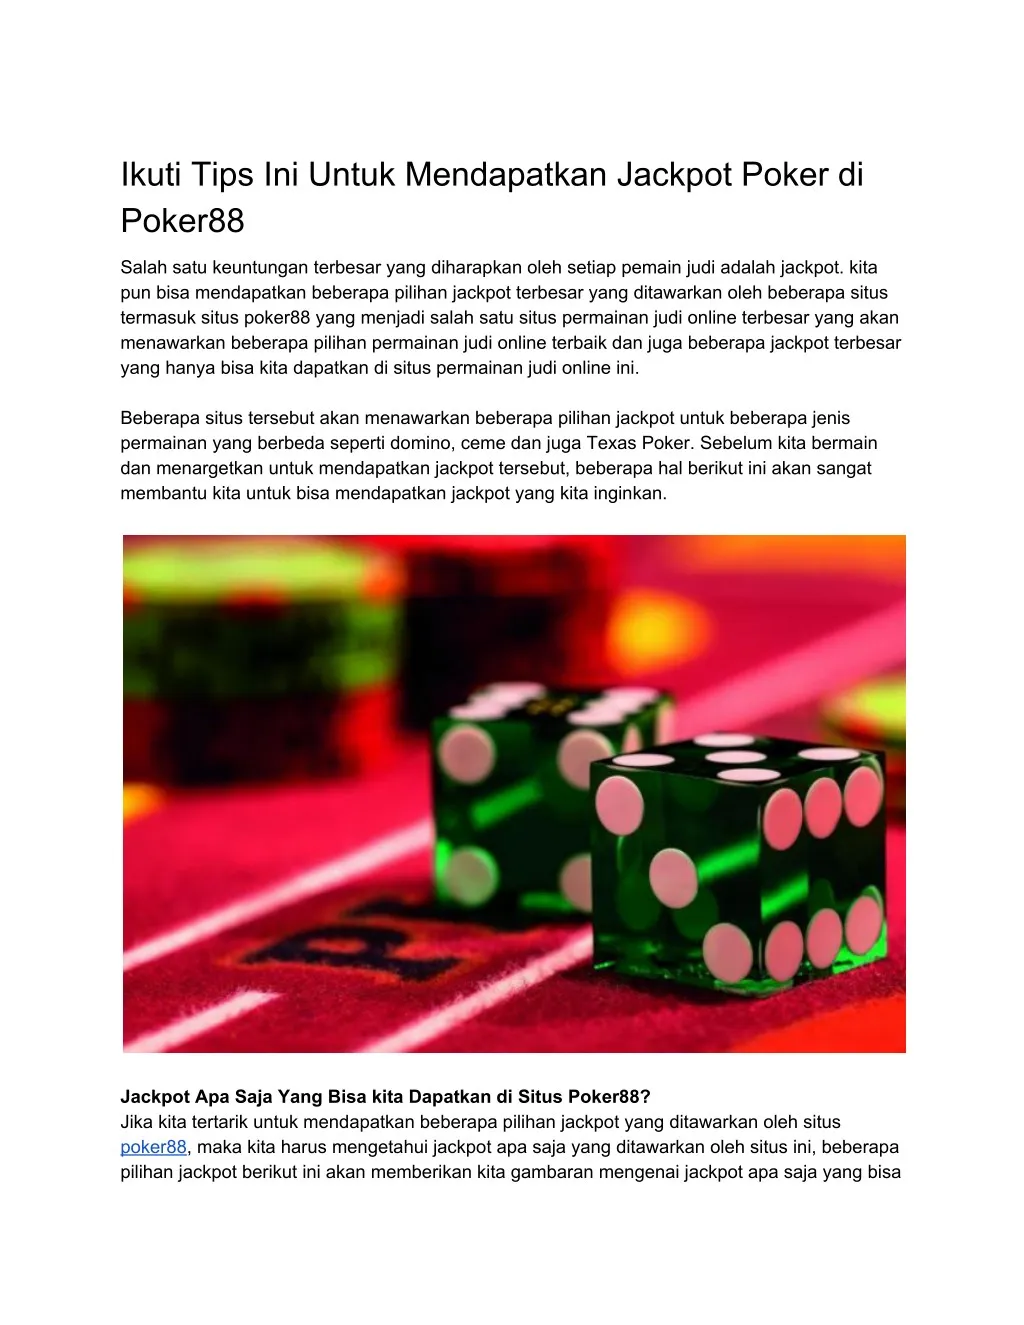 ikuti tips ini untuk mendapatkan jackpot poker